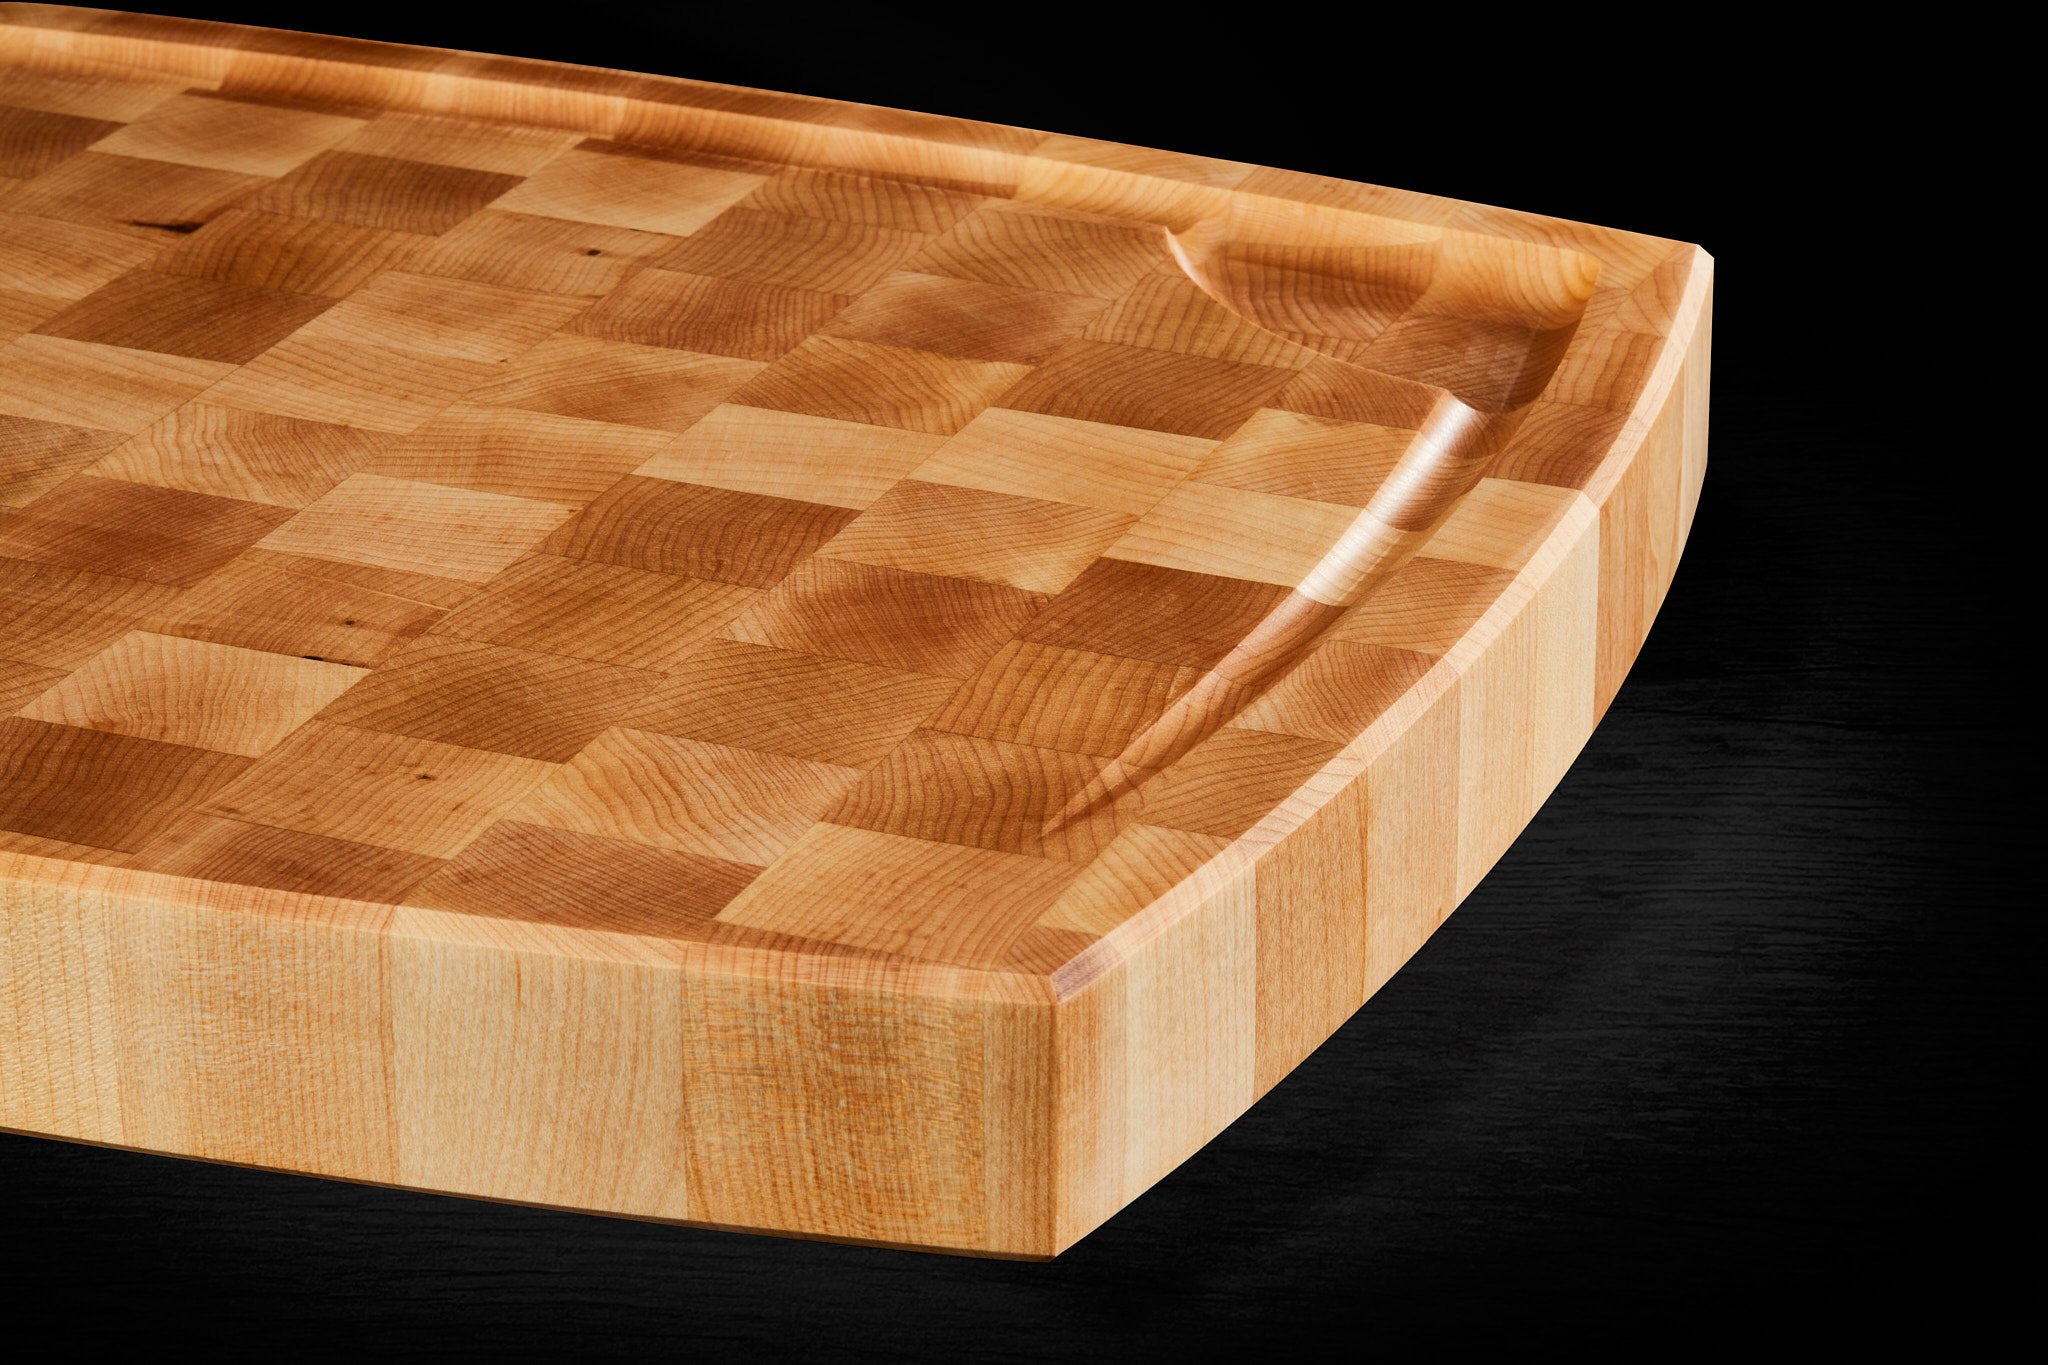 End grain cutting board Handmade Maple and Padauk checkered butcher block  Large wooden cutting boards End grain handmade charcuterie board